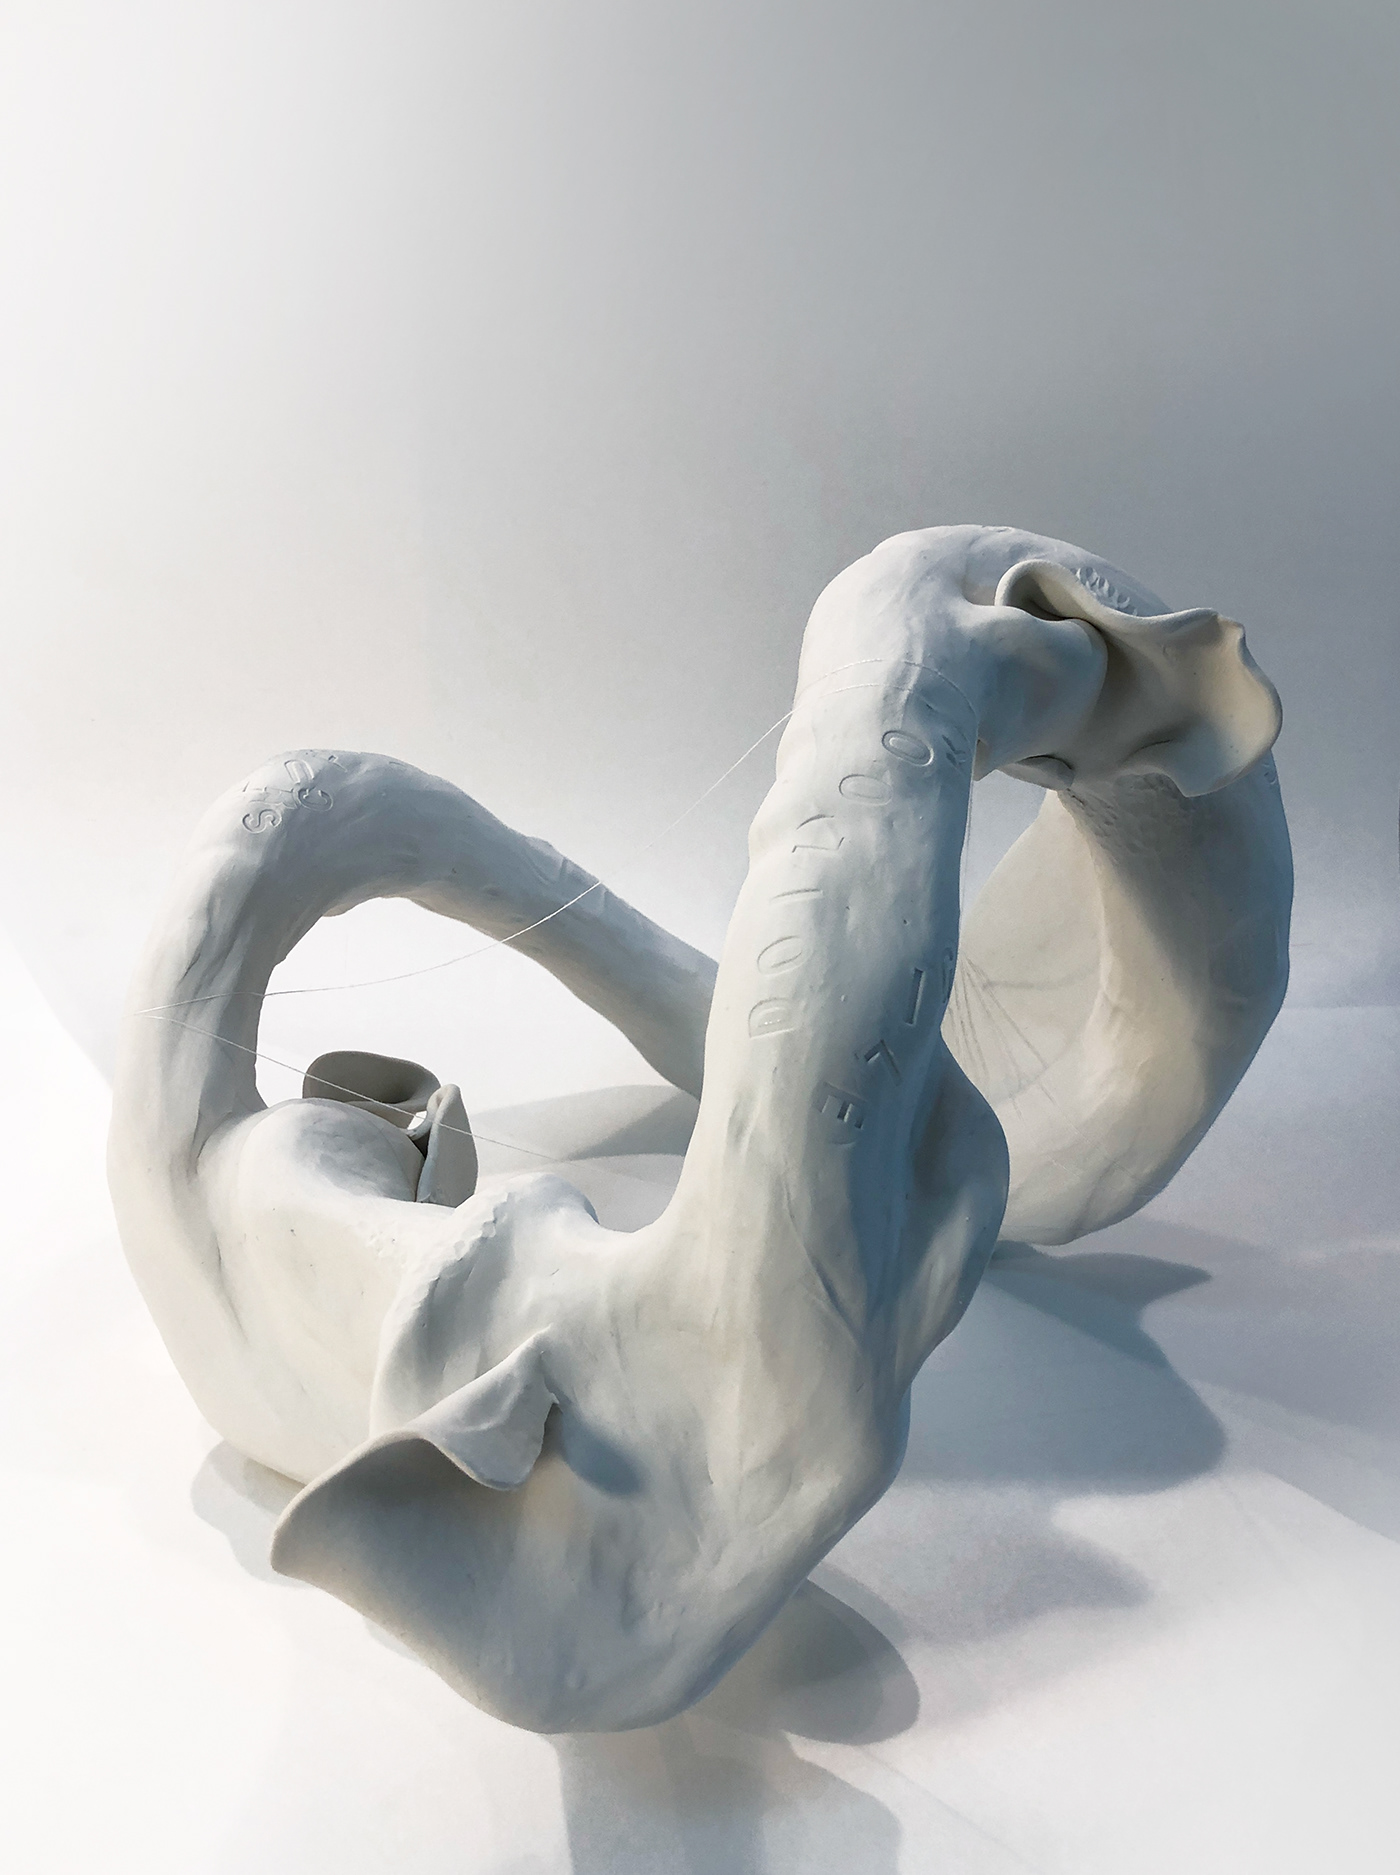 conceptual conceptual art dual monologue handmade sculpture